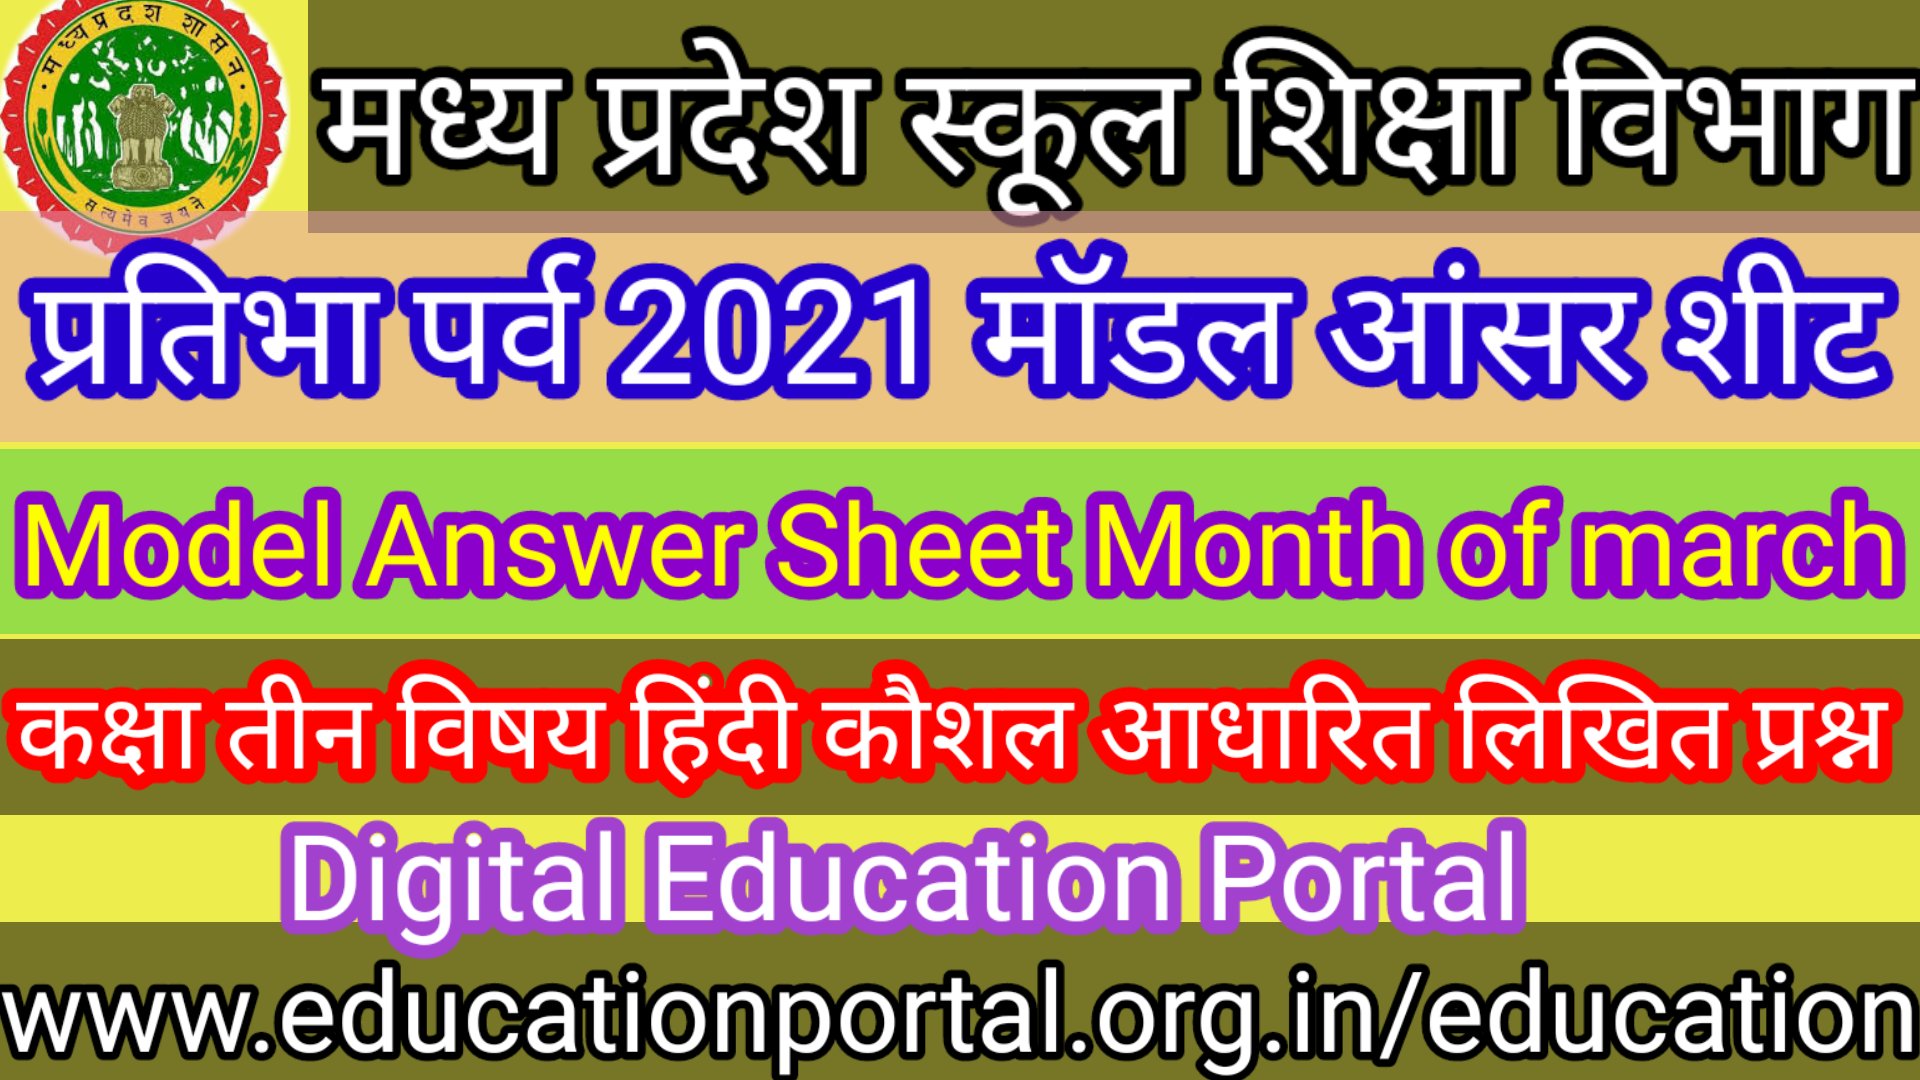 मॉडल आंसर शीट माह मार्च विषय हिन्दी कक्षा 3री || Model Answer Sheet Month of march Topic Hindi Class 3rd